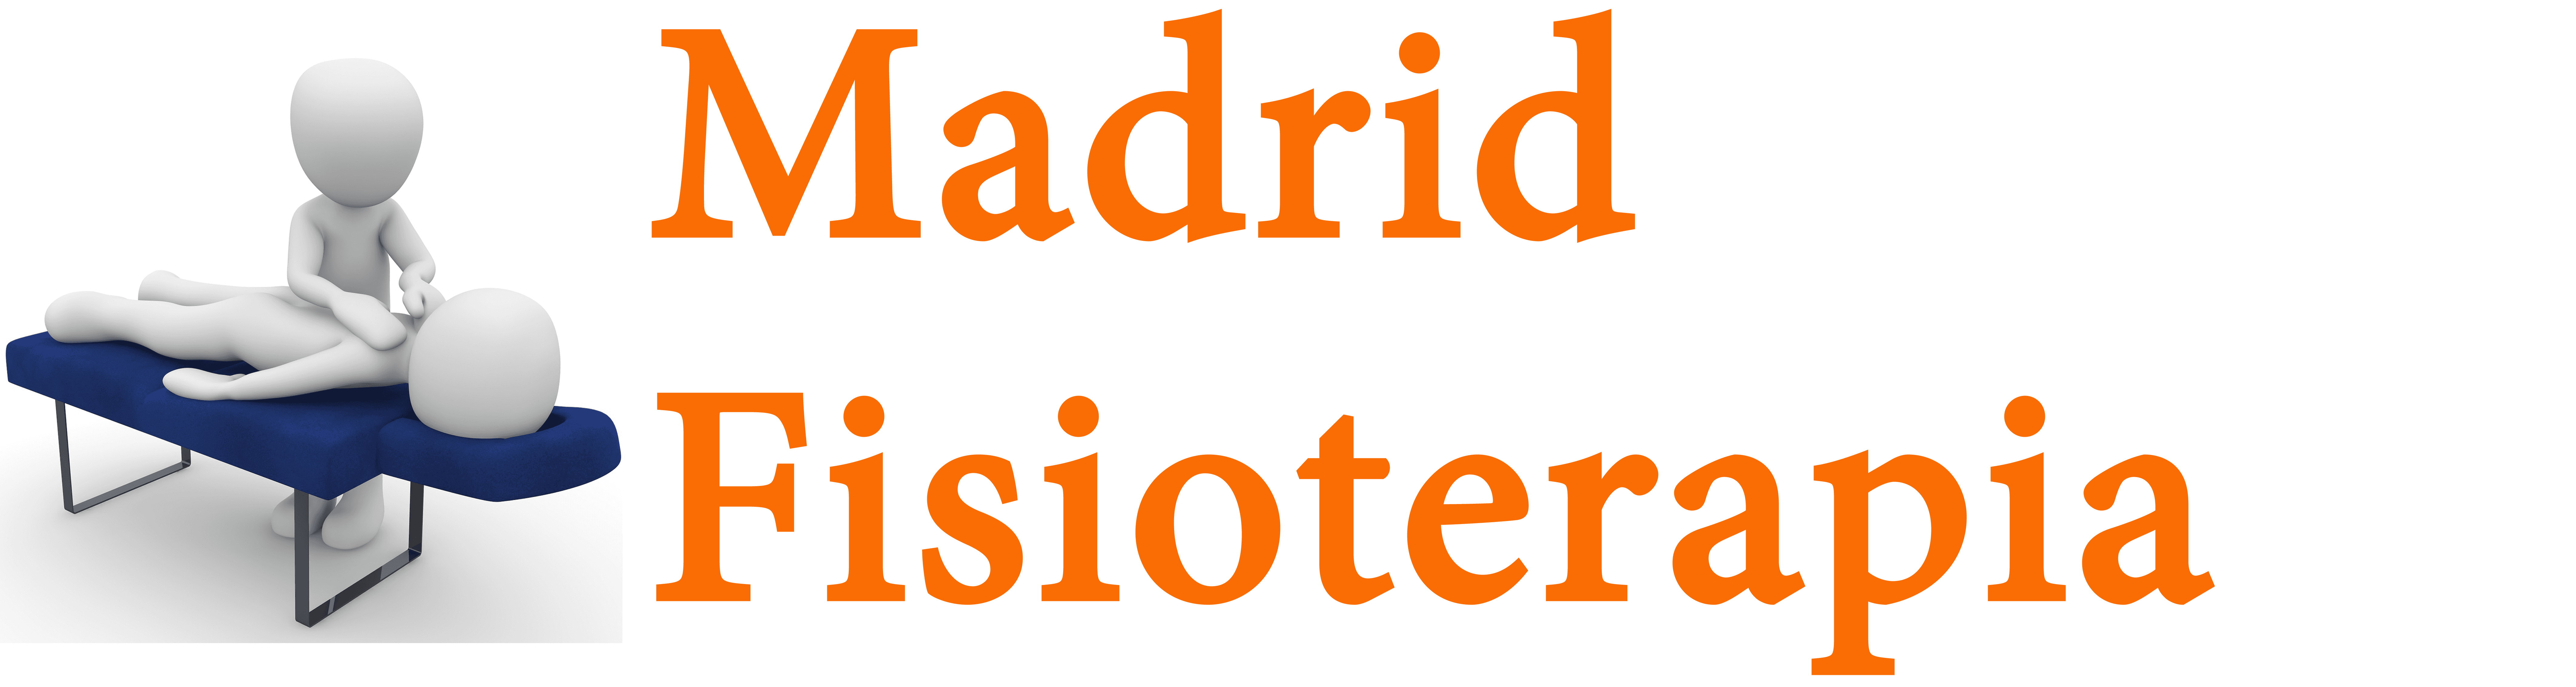 Madrid Fisioterapia